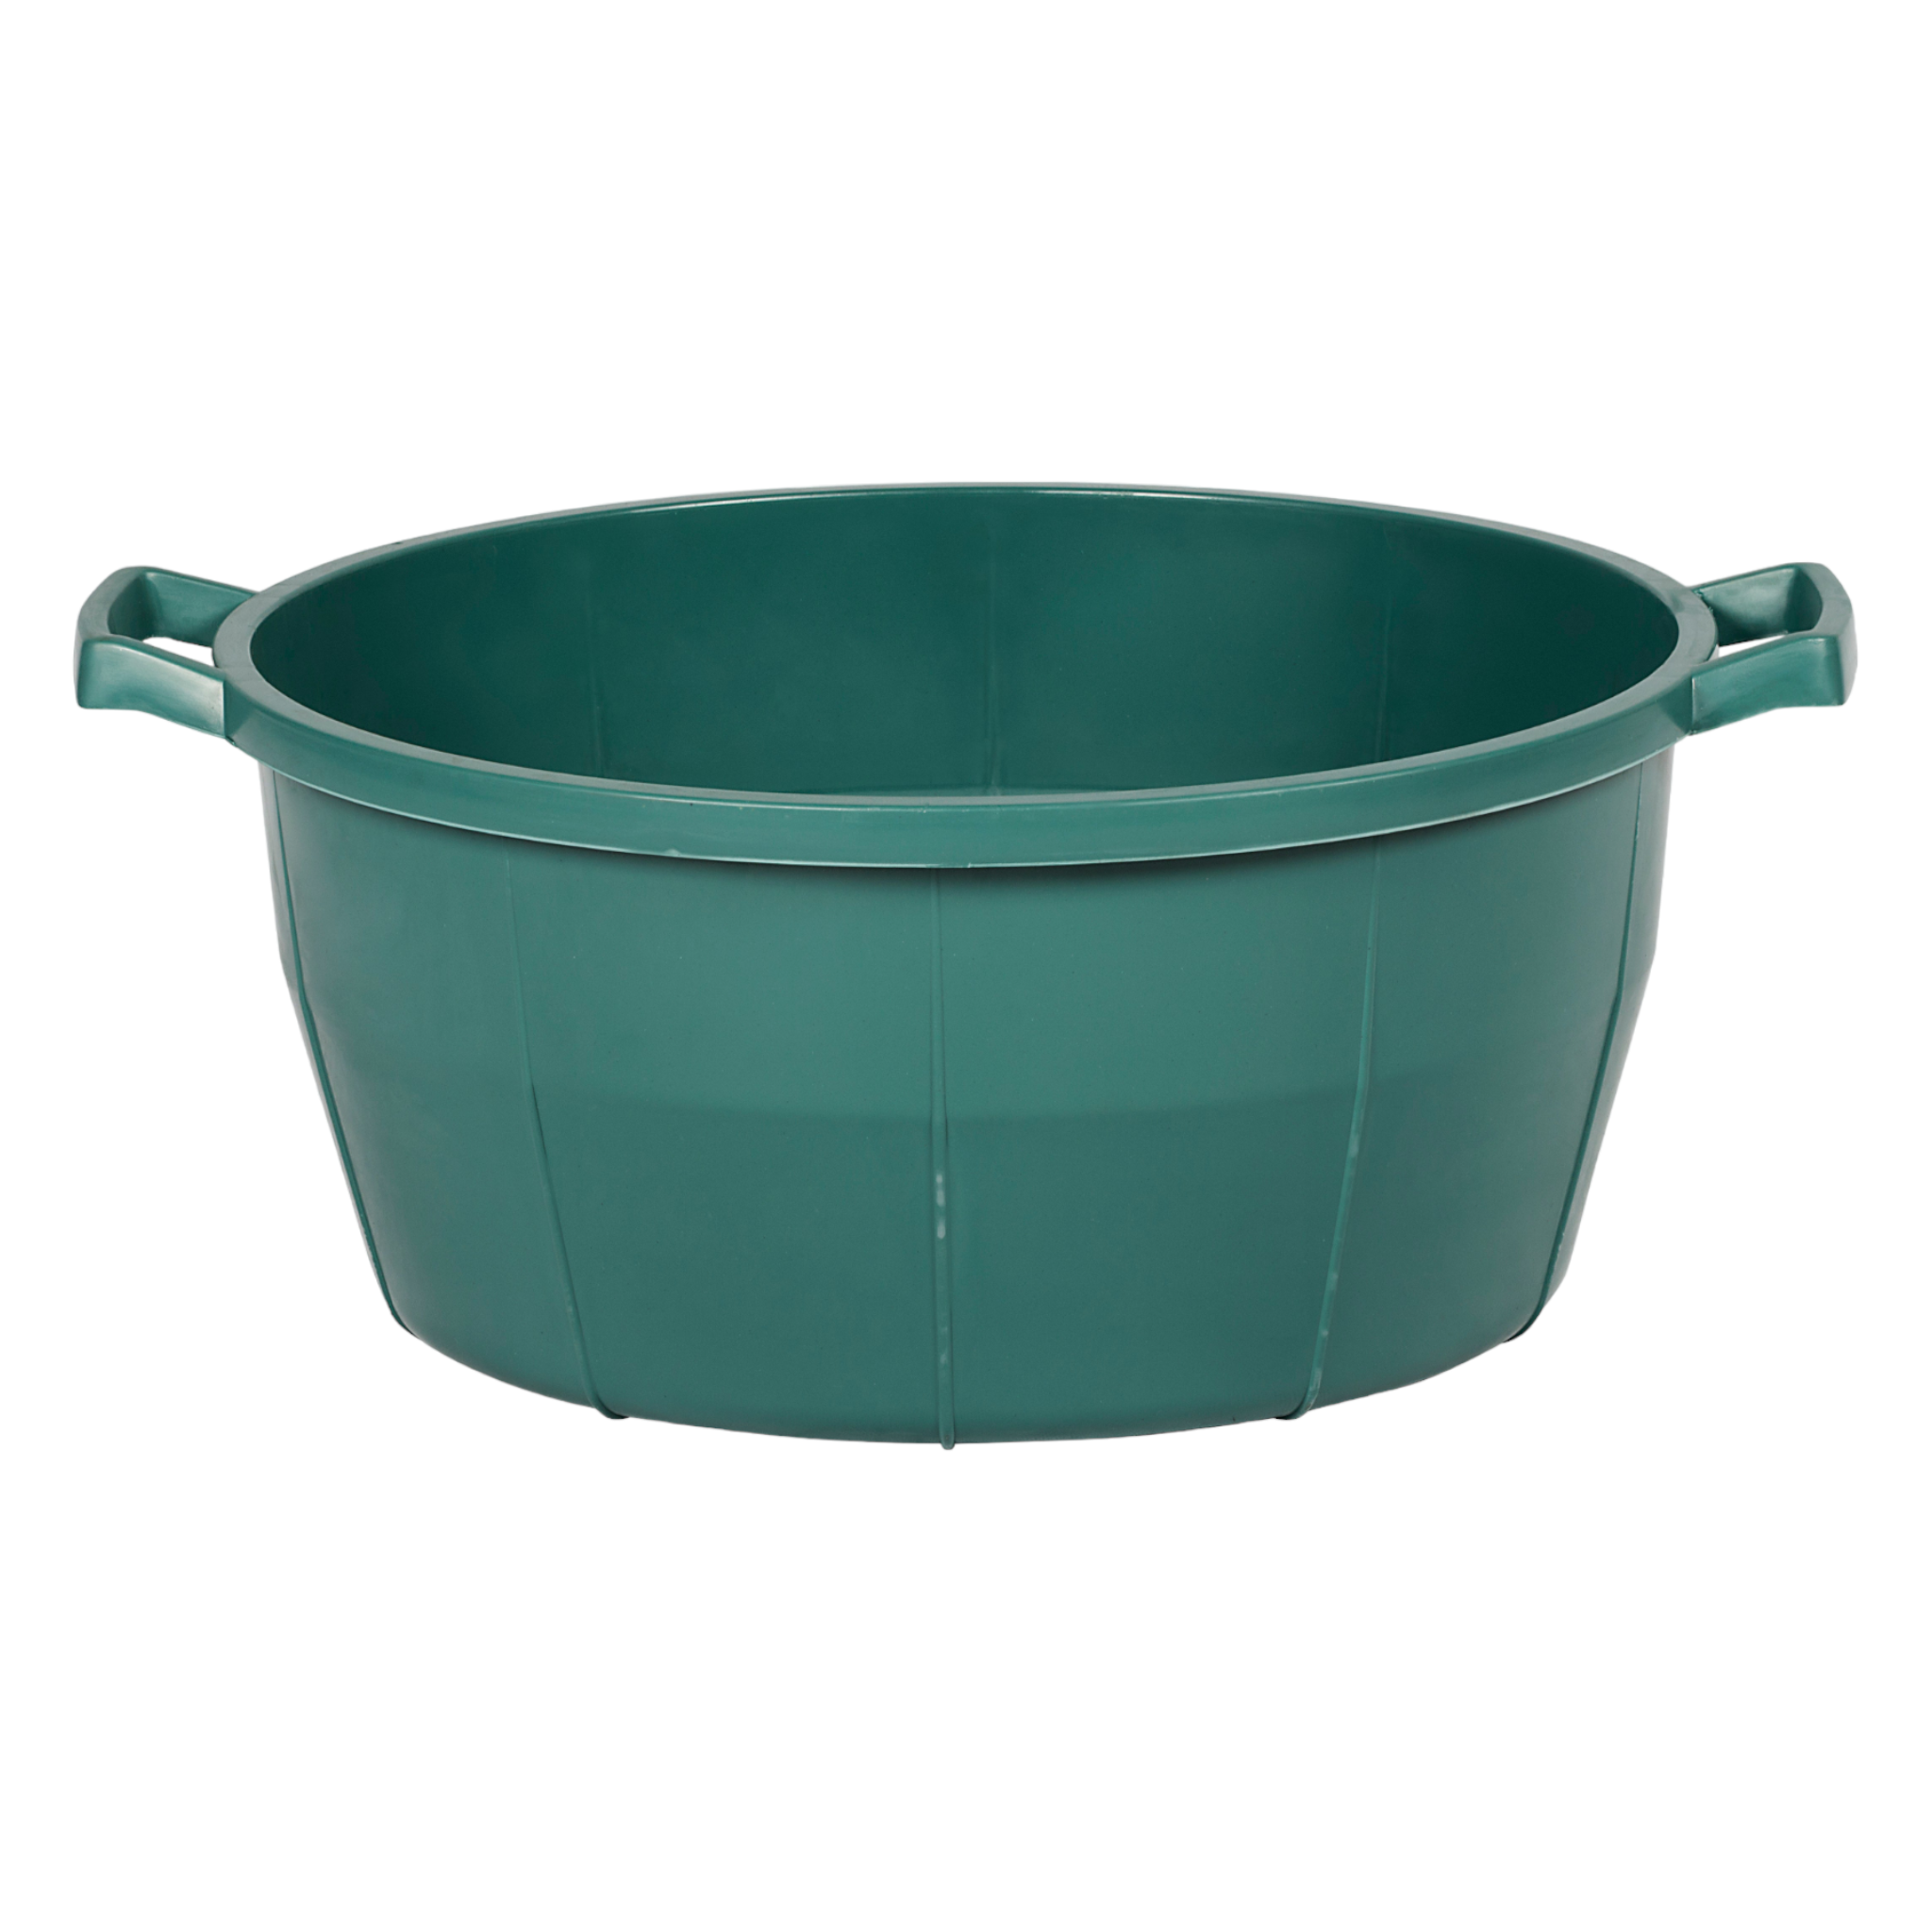 46cm Plastic Oval Basin Tub with Handle Buzz